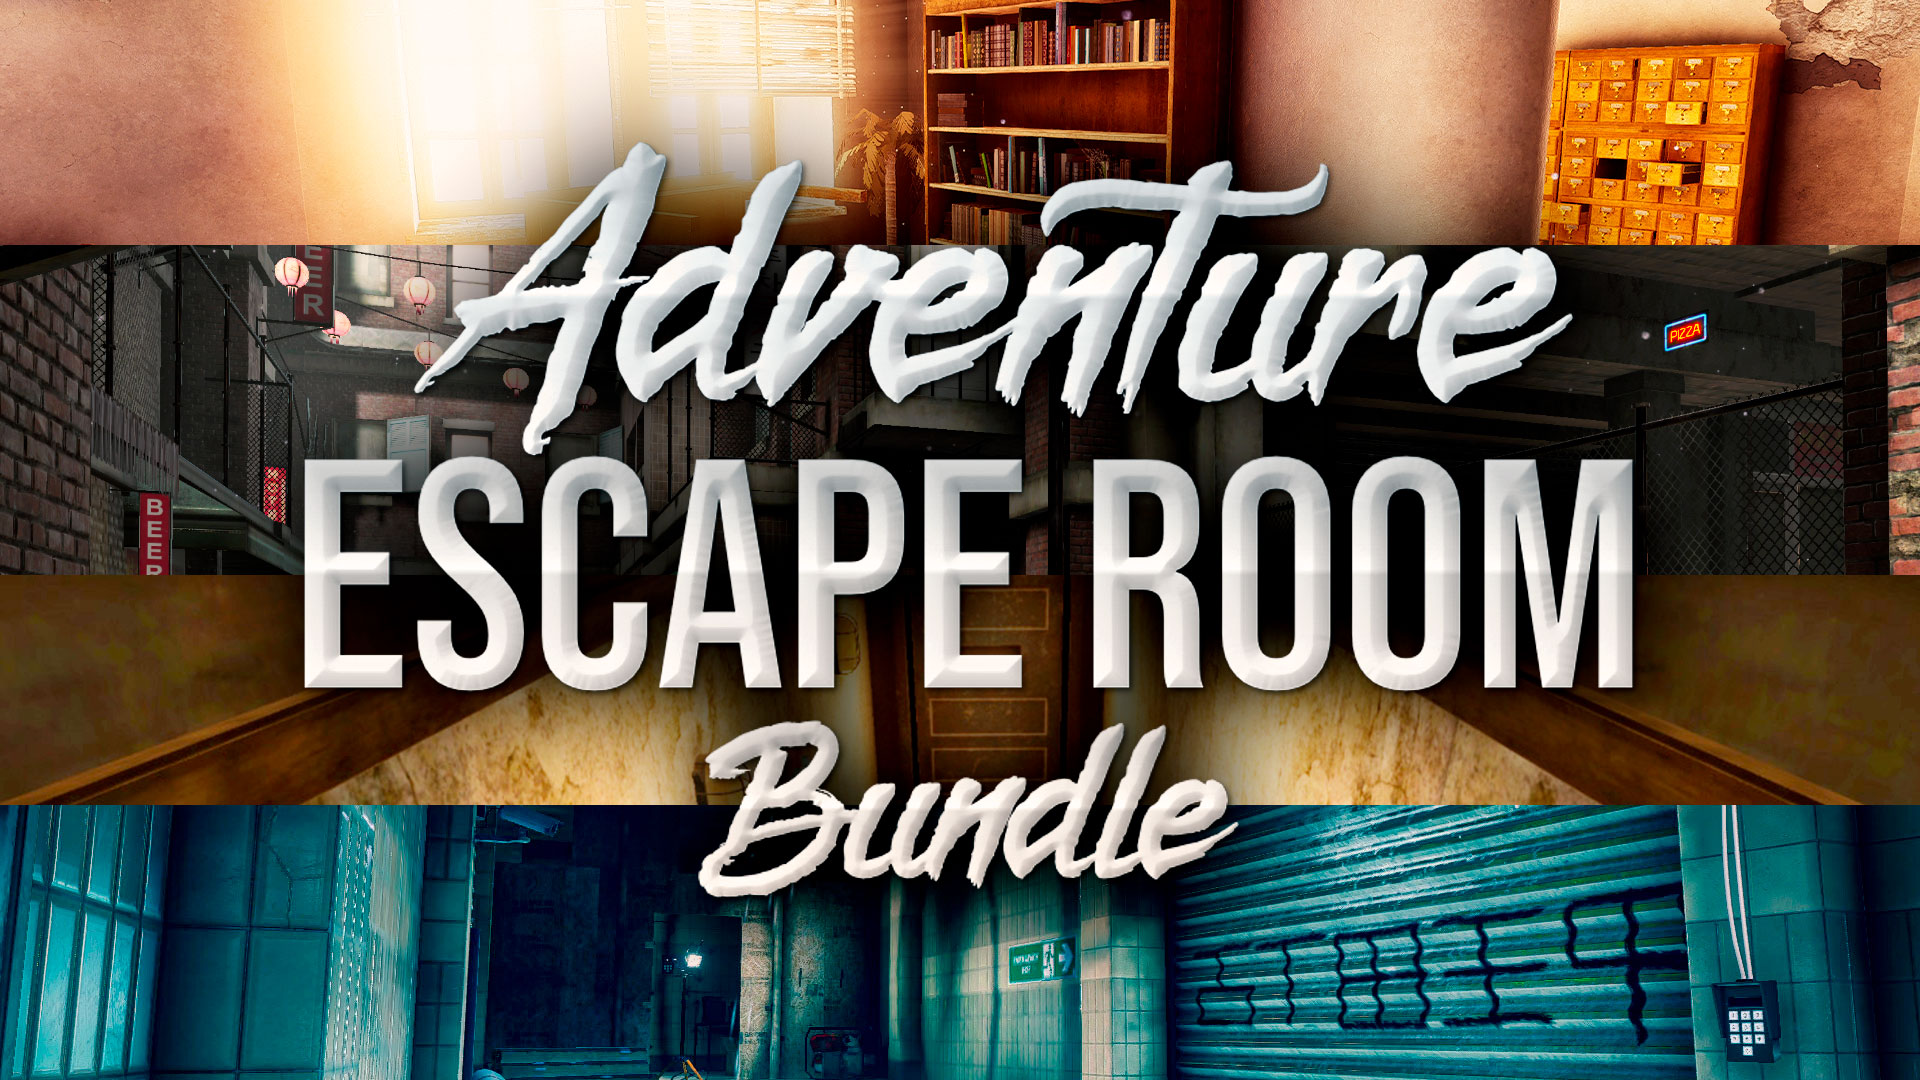 a time travel adventure escape room